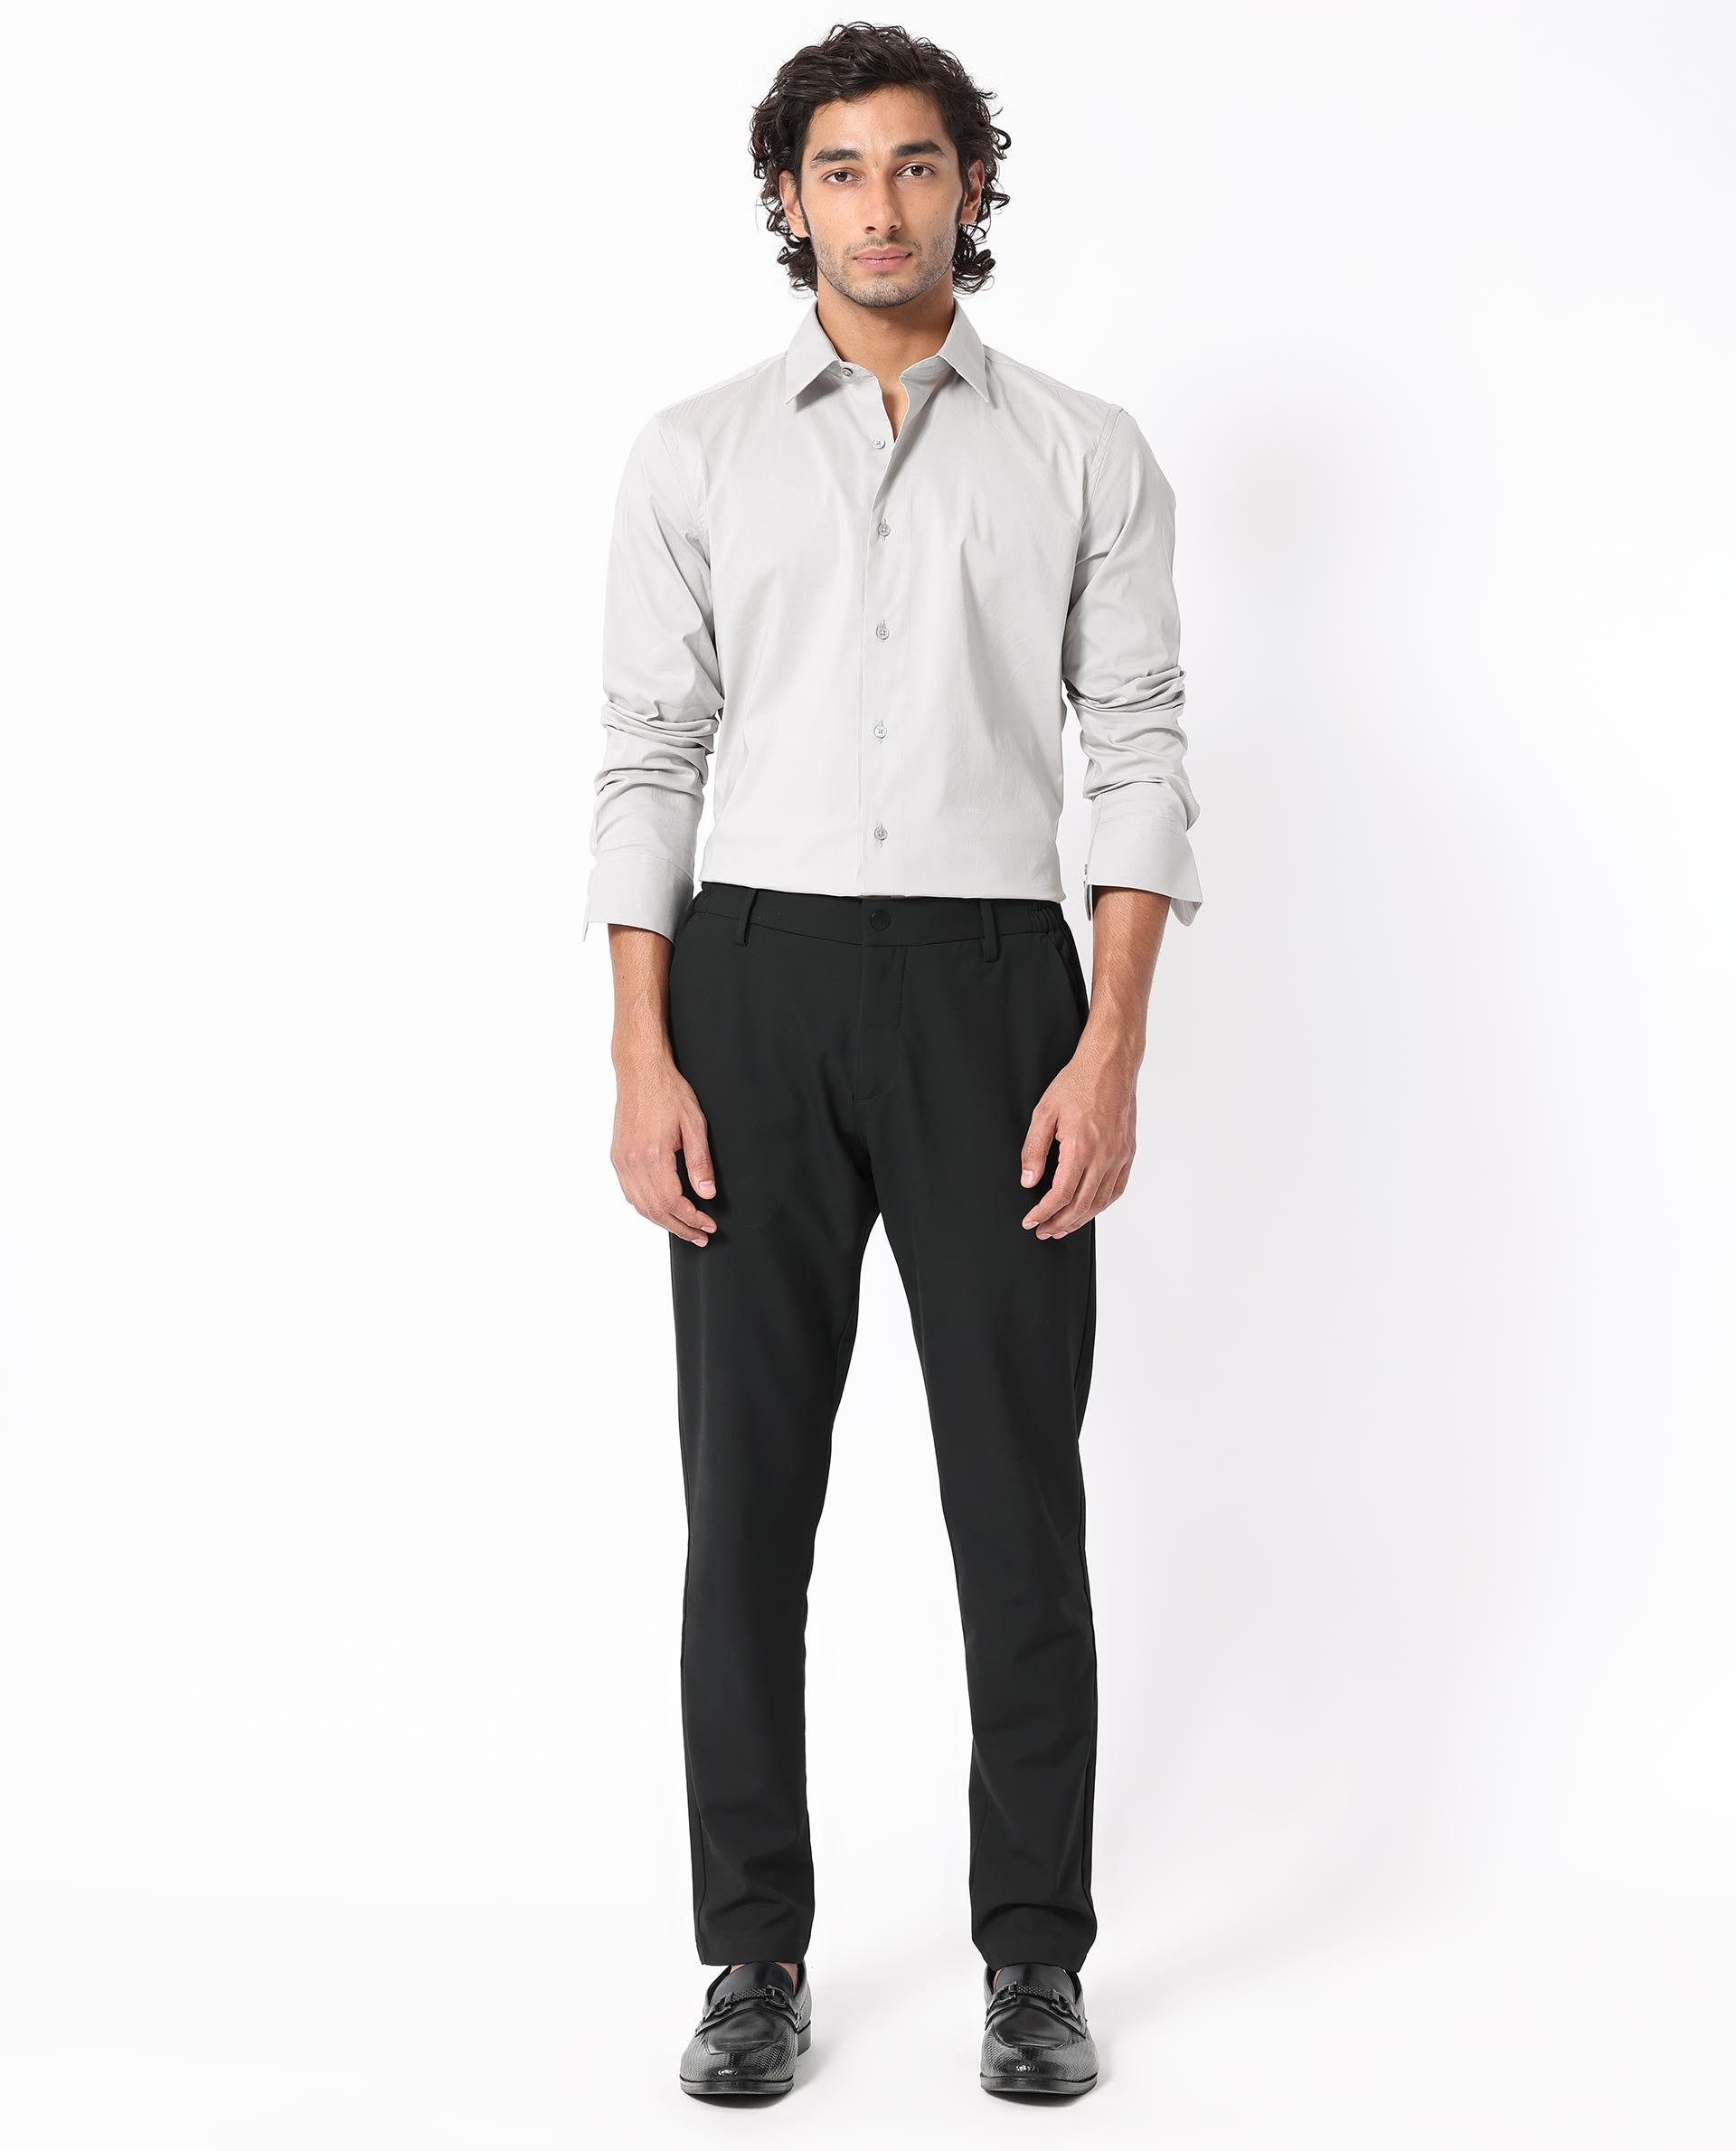 Slim fit shirt COLOUR light grey - RESERVED - 8275H-09X